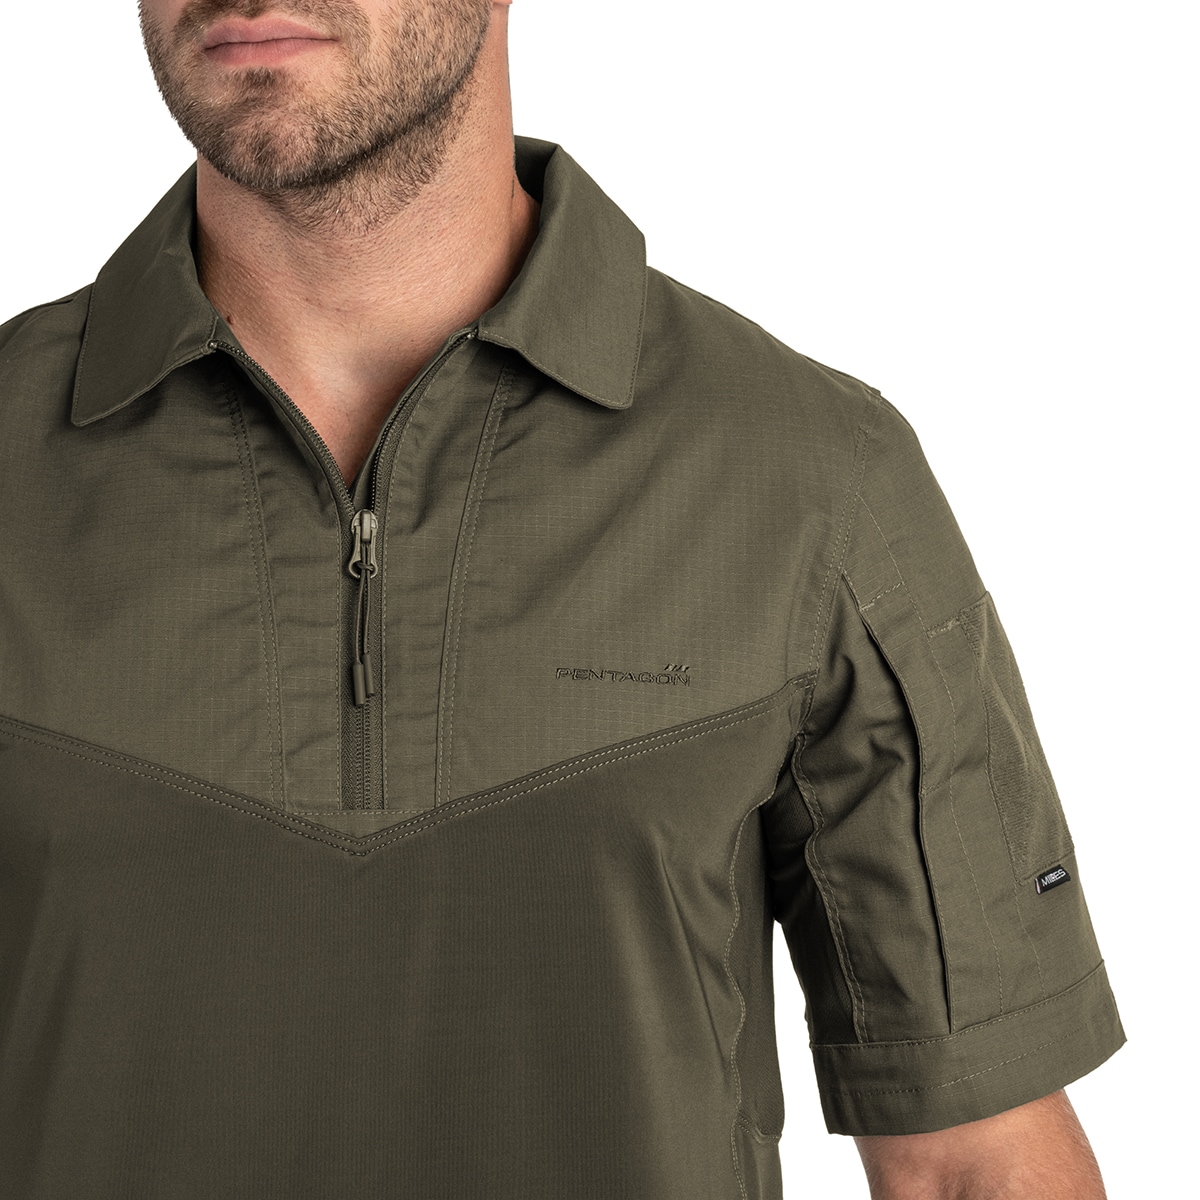 Bluza Pentagon Combat Shirt Ranger Short Sleeve - Ranger Green